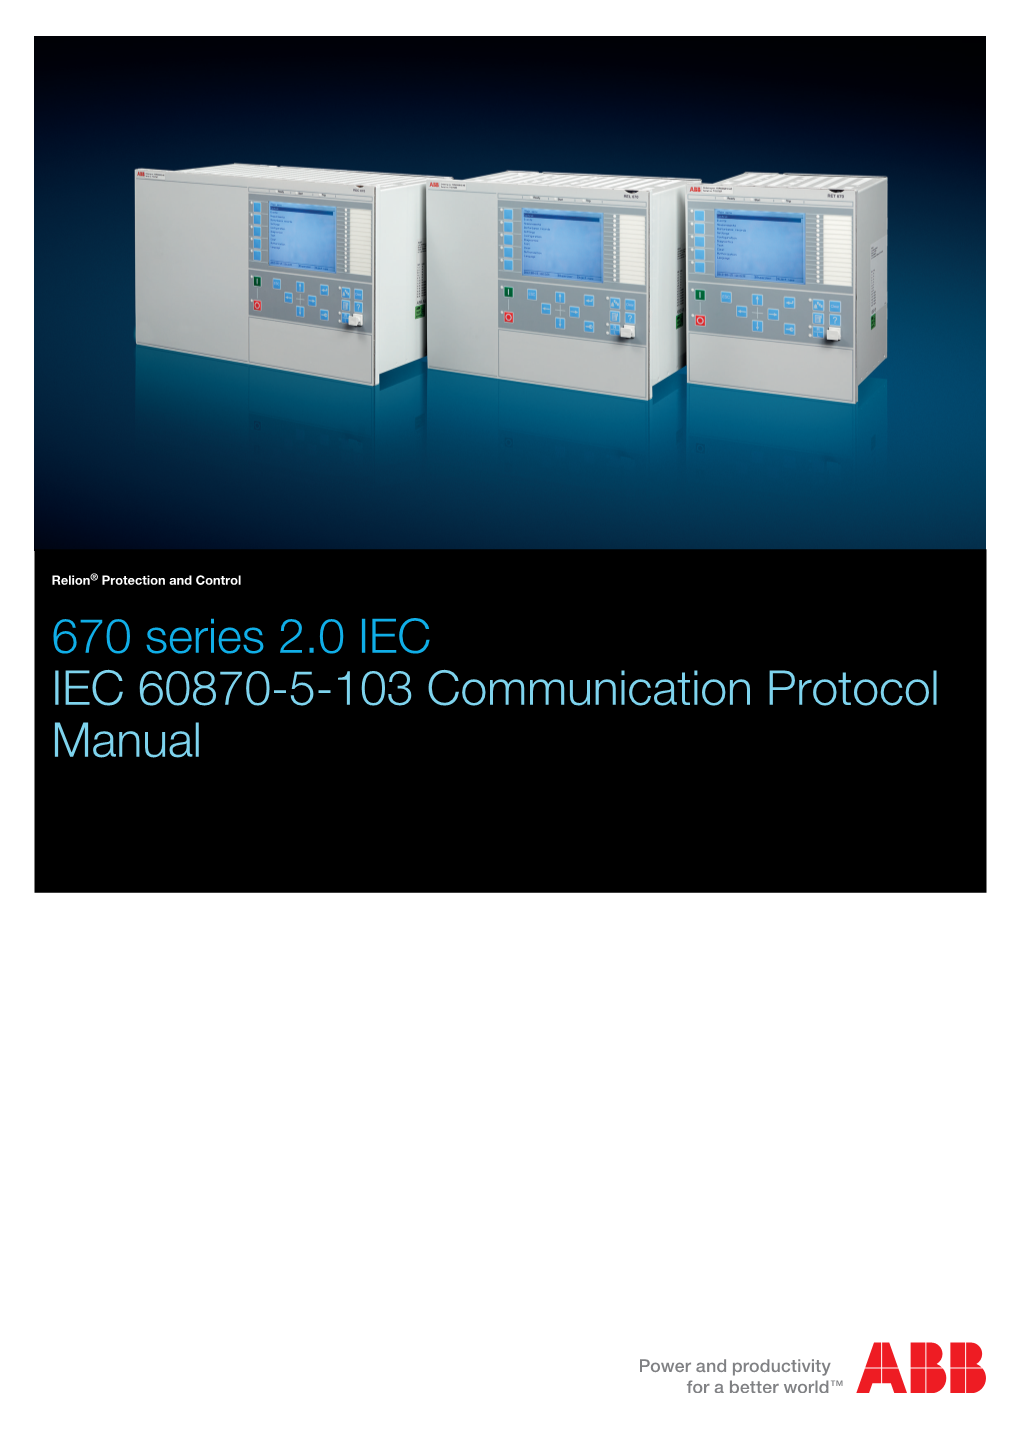 IEC 60870-5-103 Communication Protocol Manual